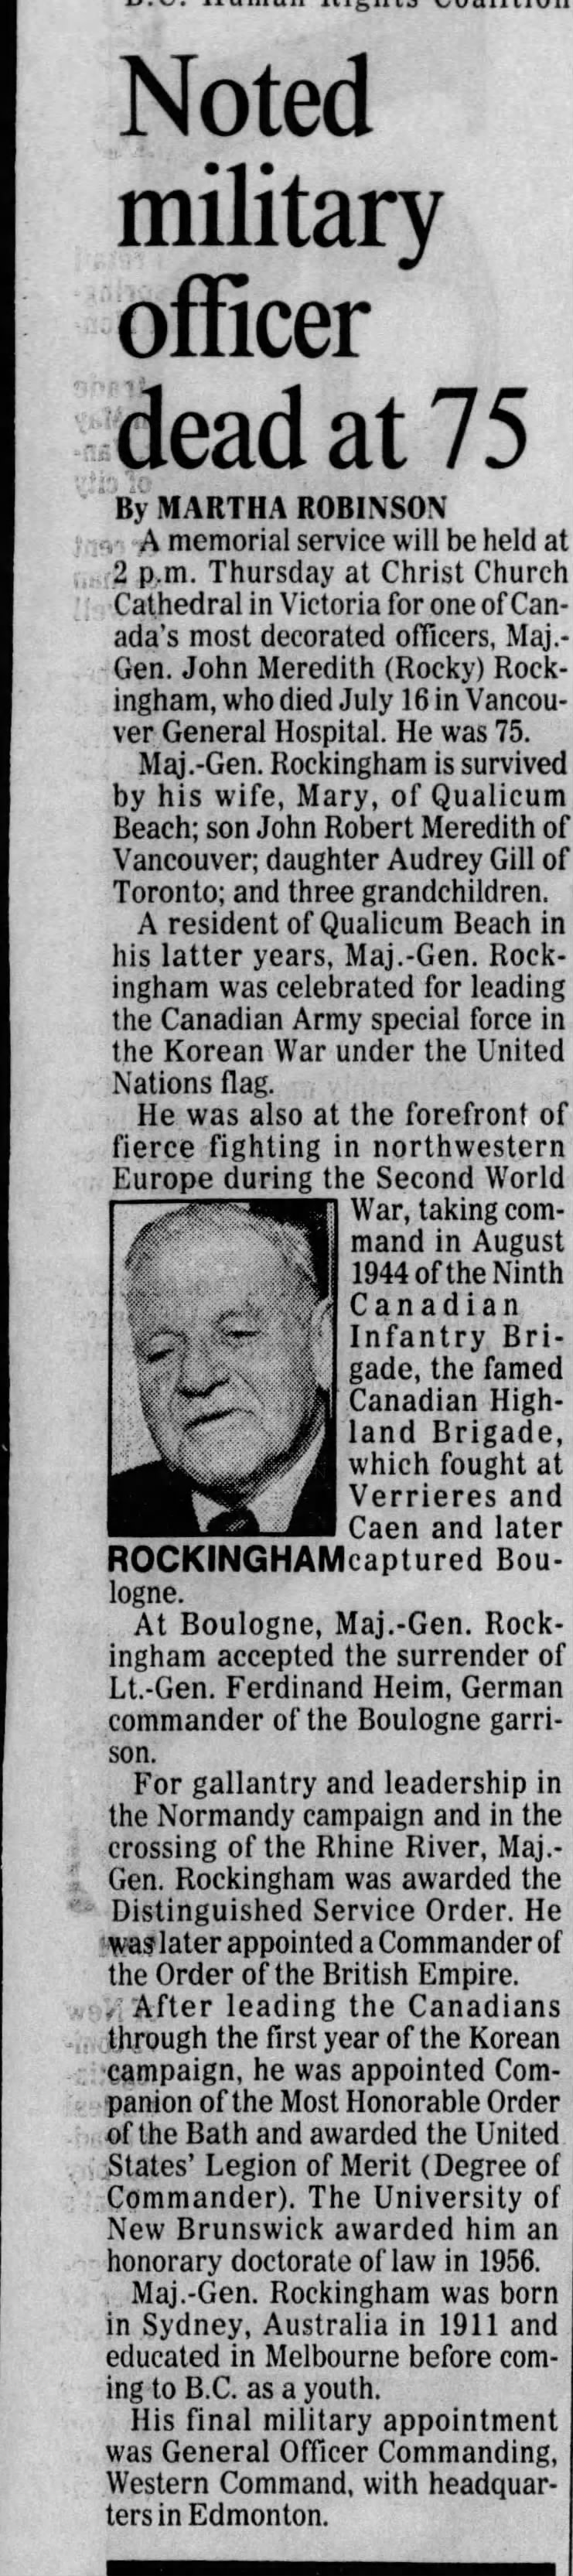 John Meredith (Rocky) Rockingham - 21 July 1987